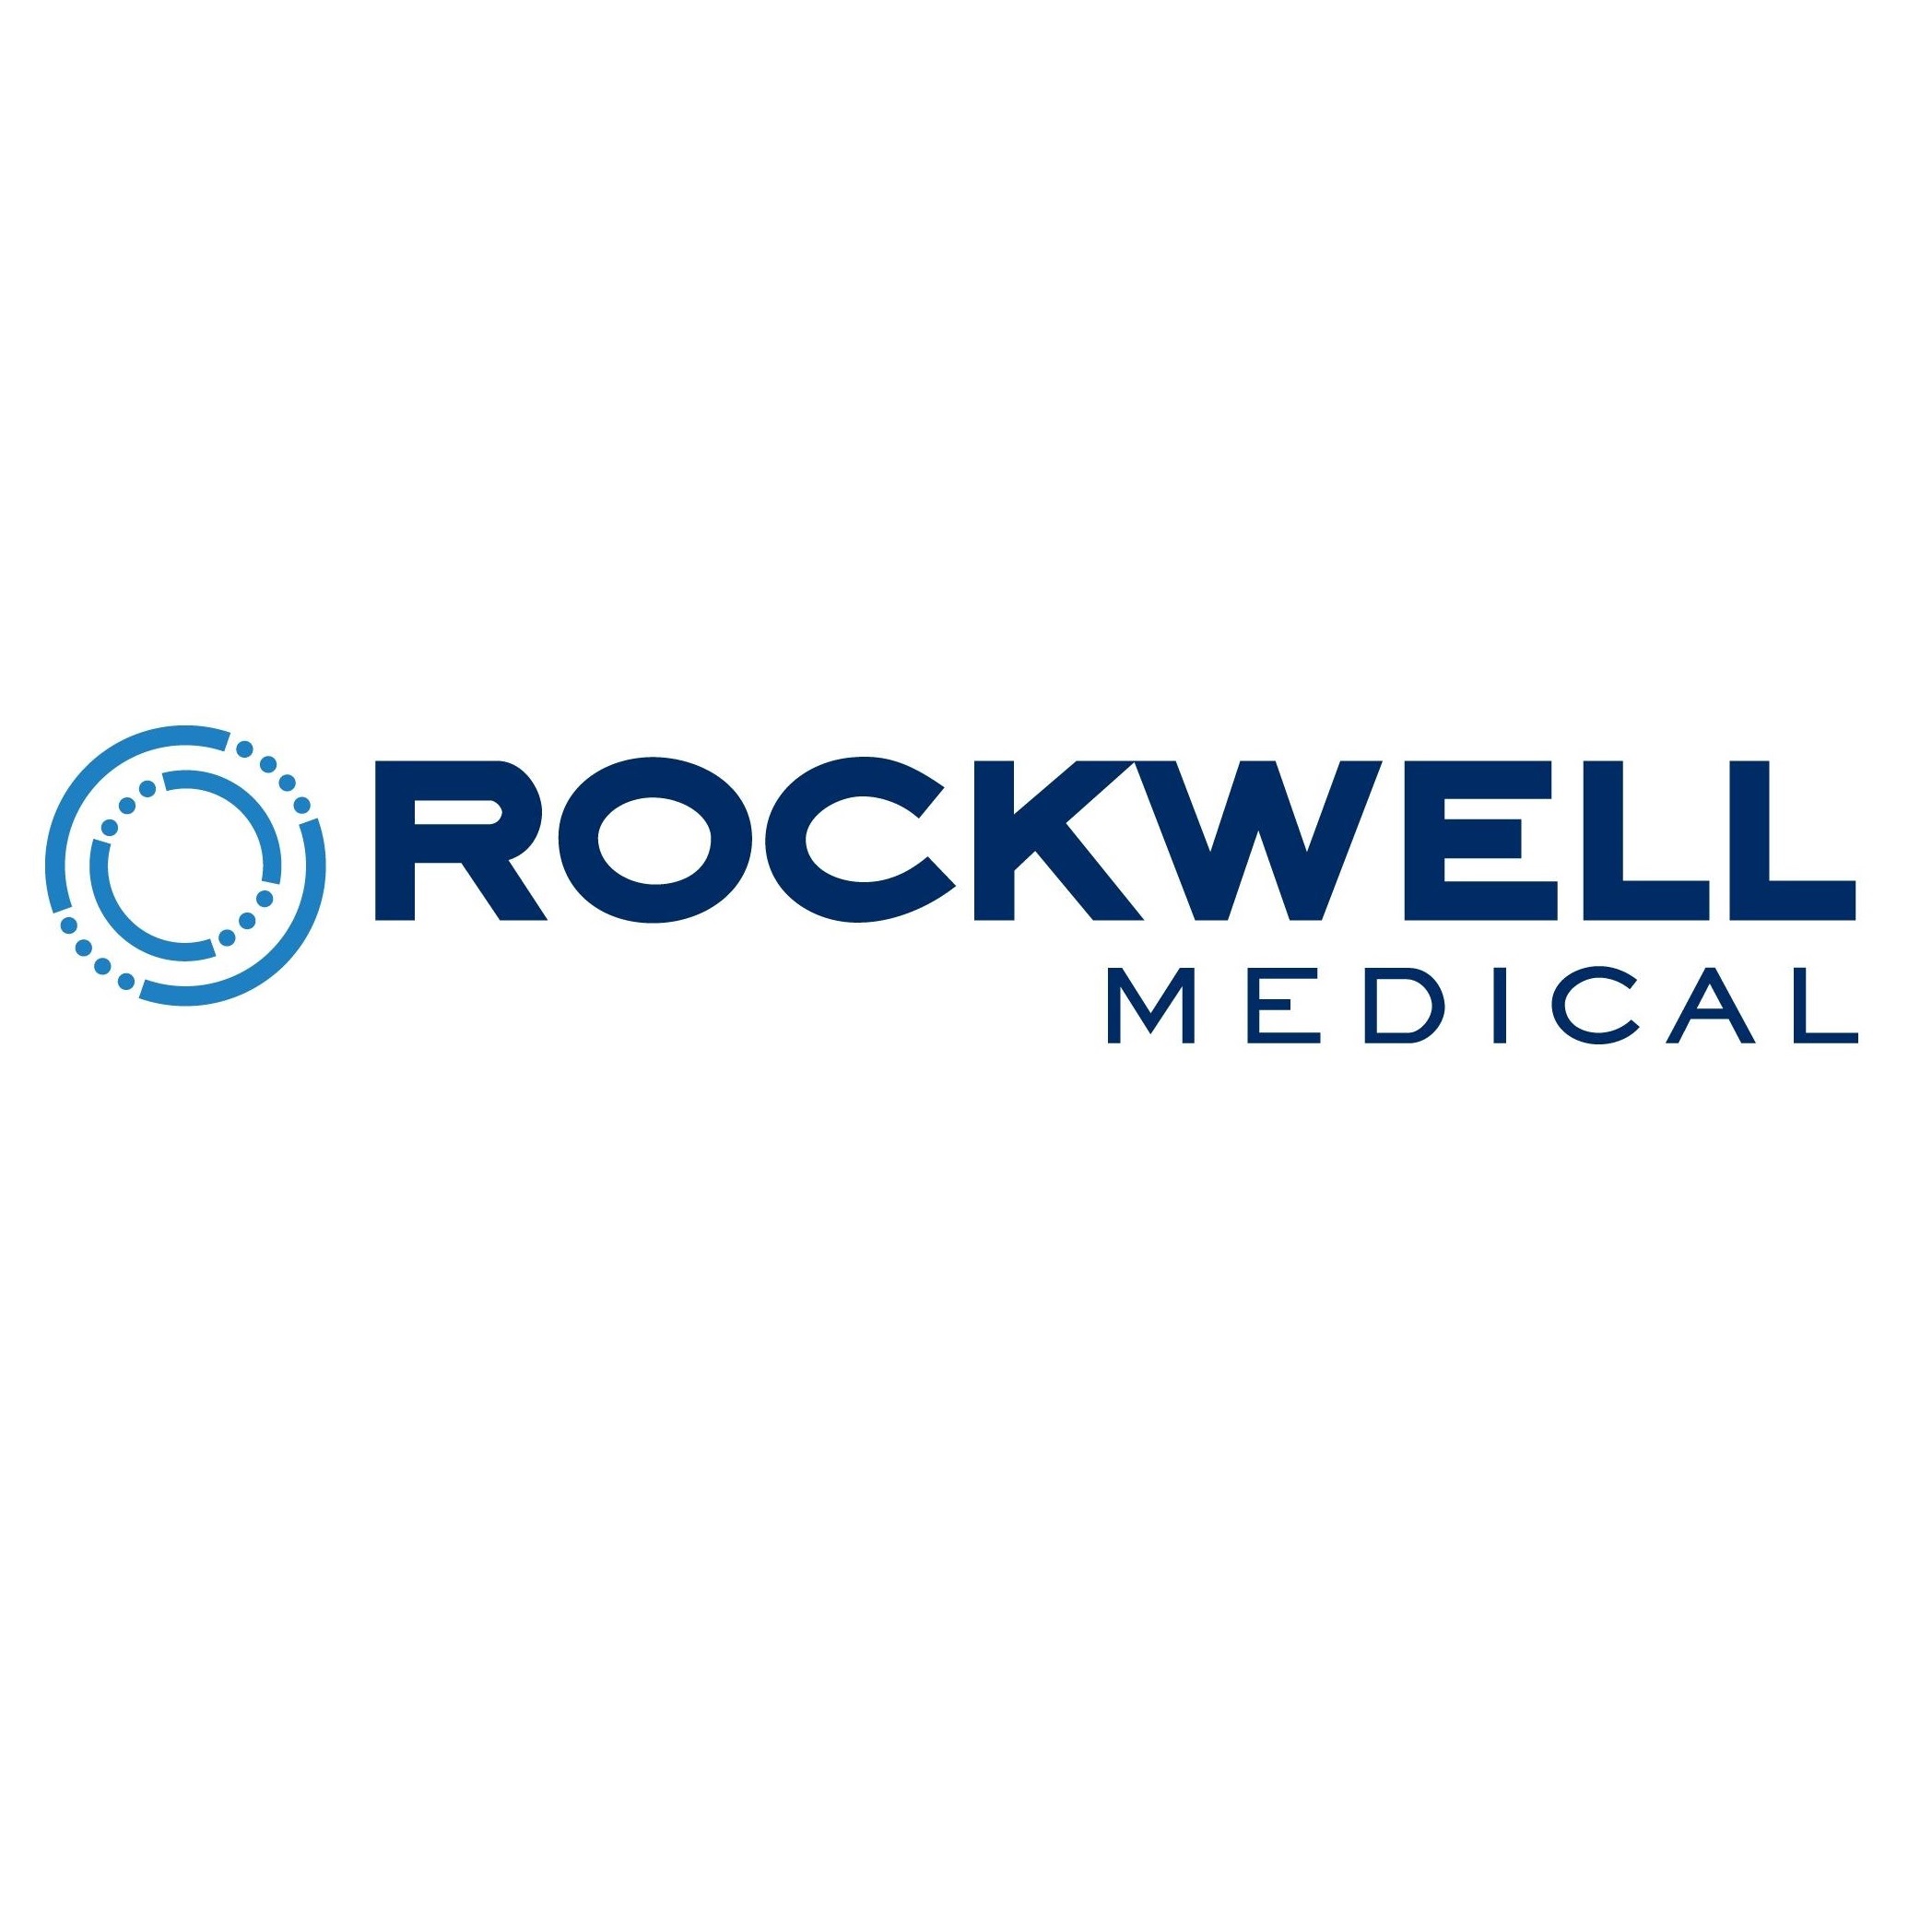 Rockwell Medical, Inc.